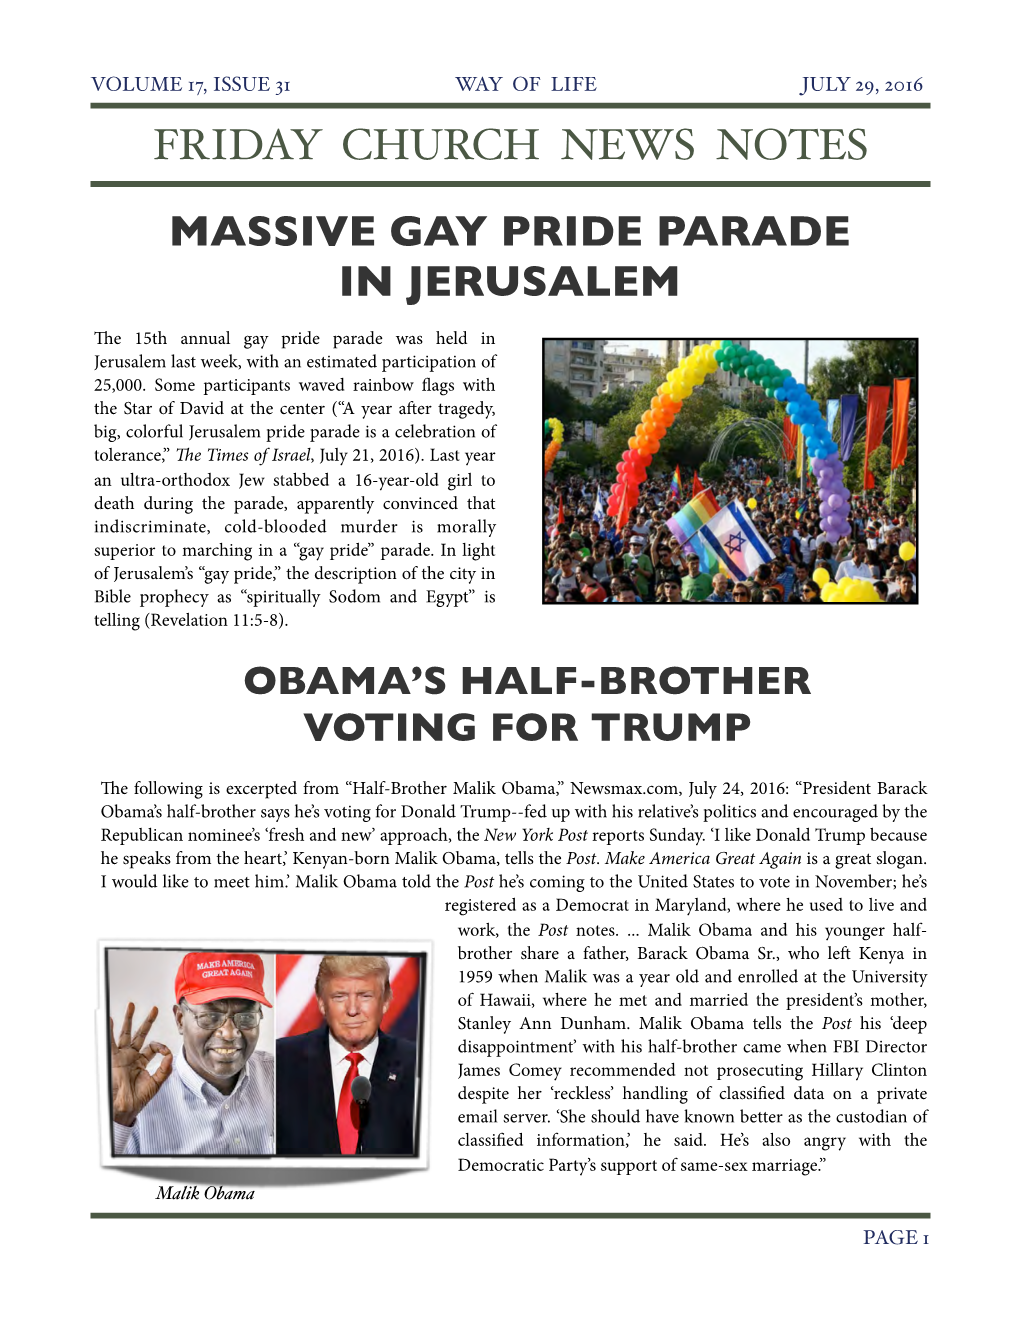 Friday Church News Notes Massive Gay Pride Parade in Jerusalem